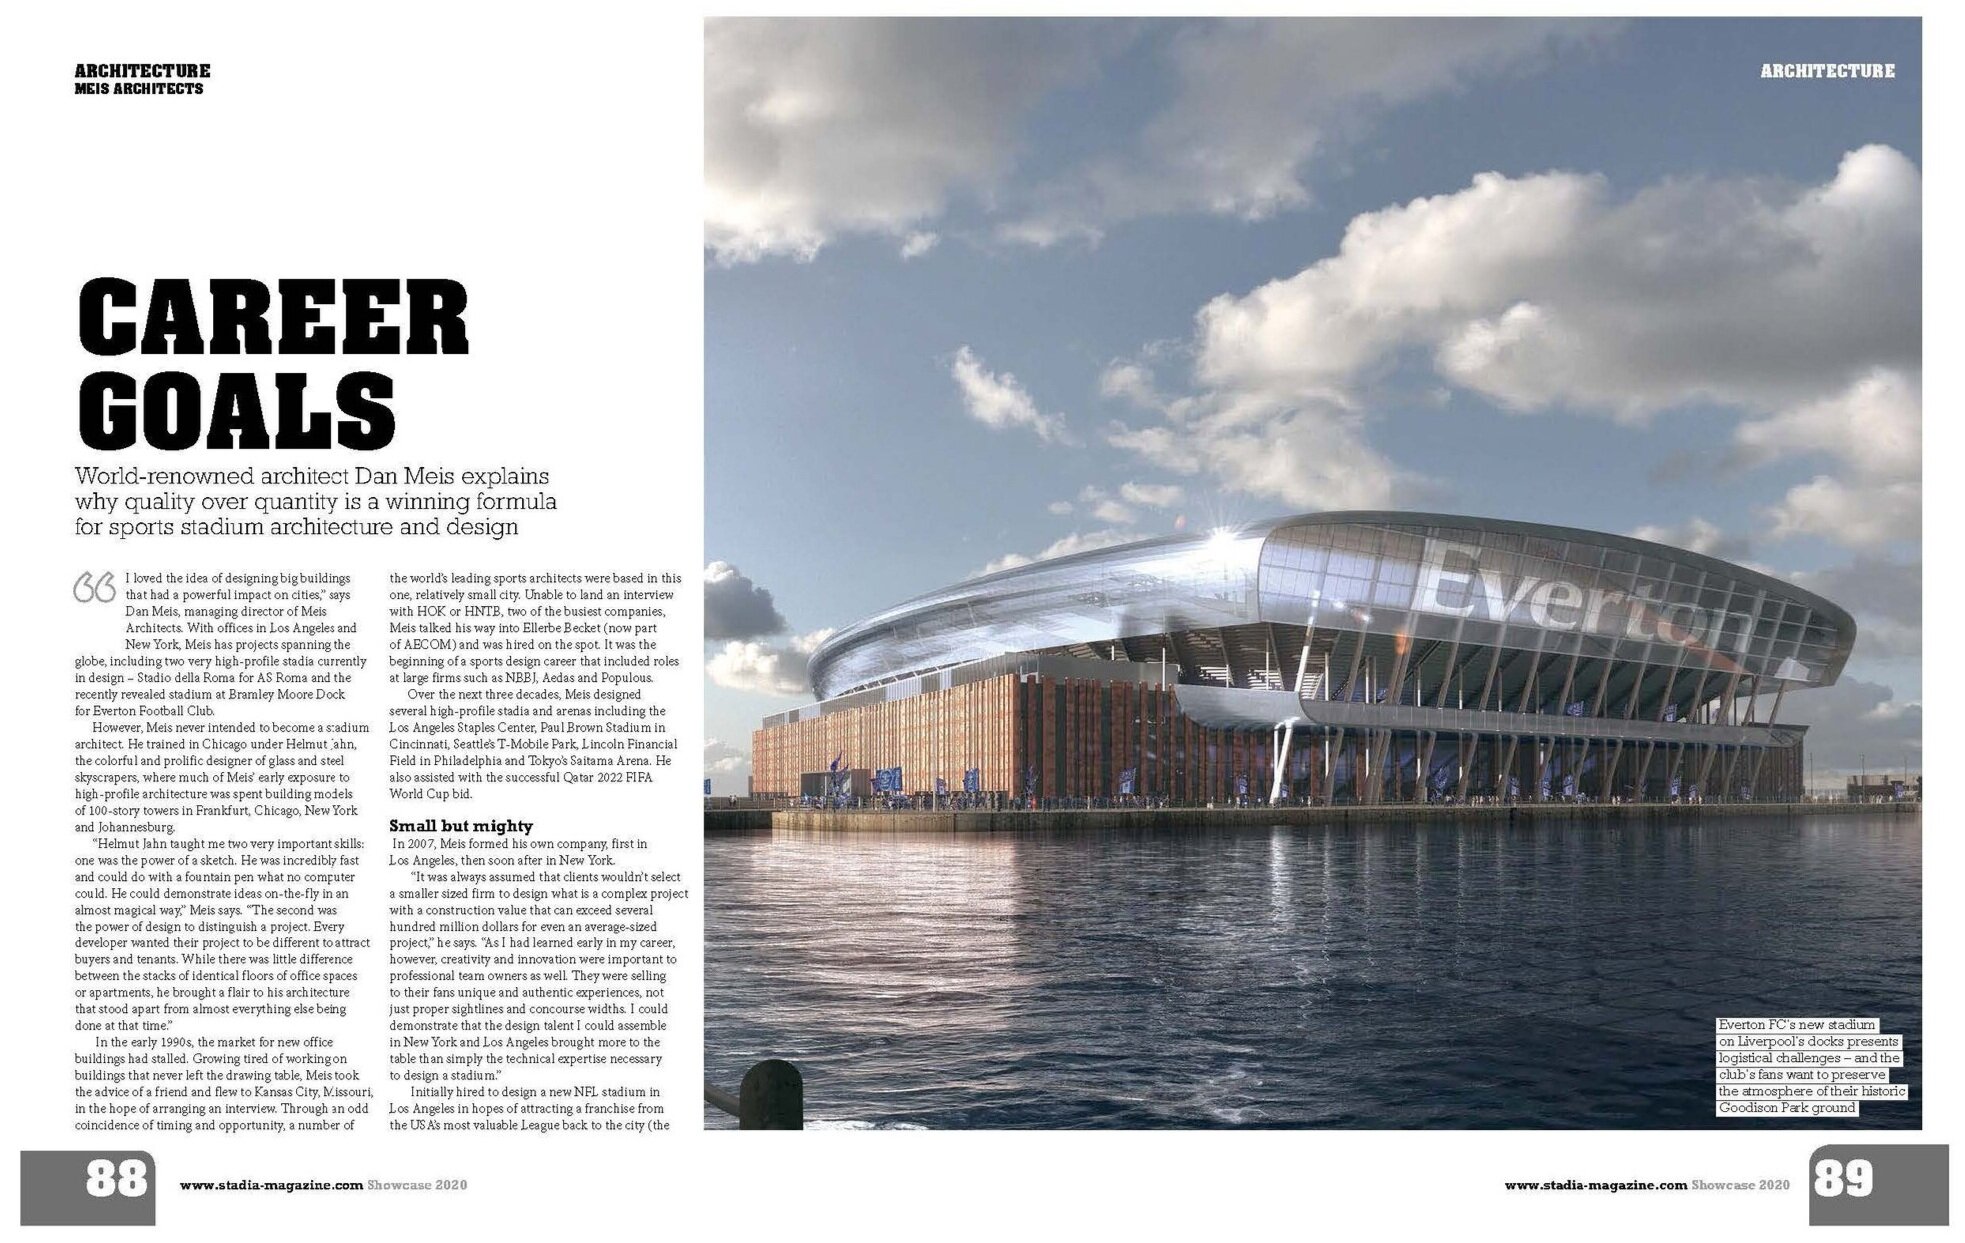 San Francisco 49ers Stadium Design Study — MEIS architects